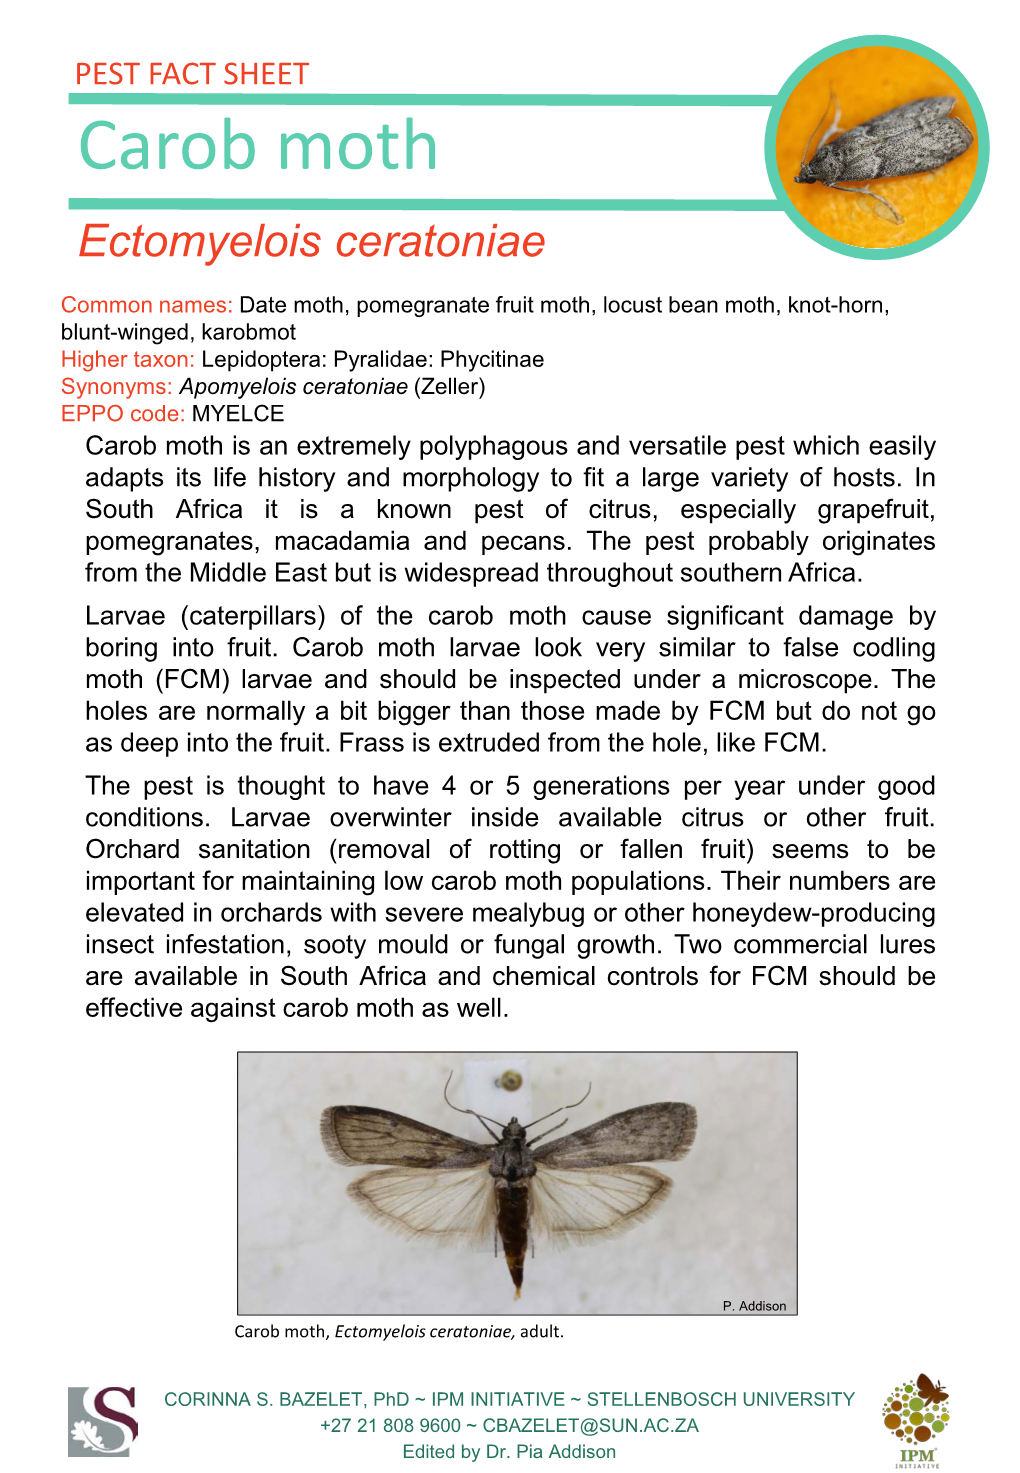 Carob Moth Ectomyelois Ceratoniae